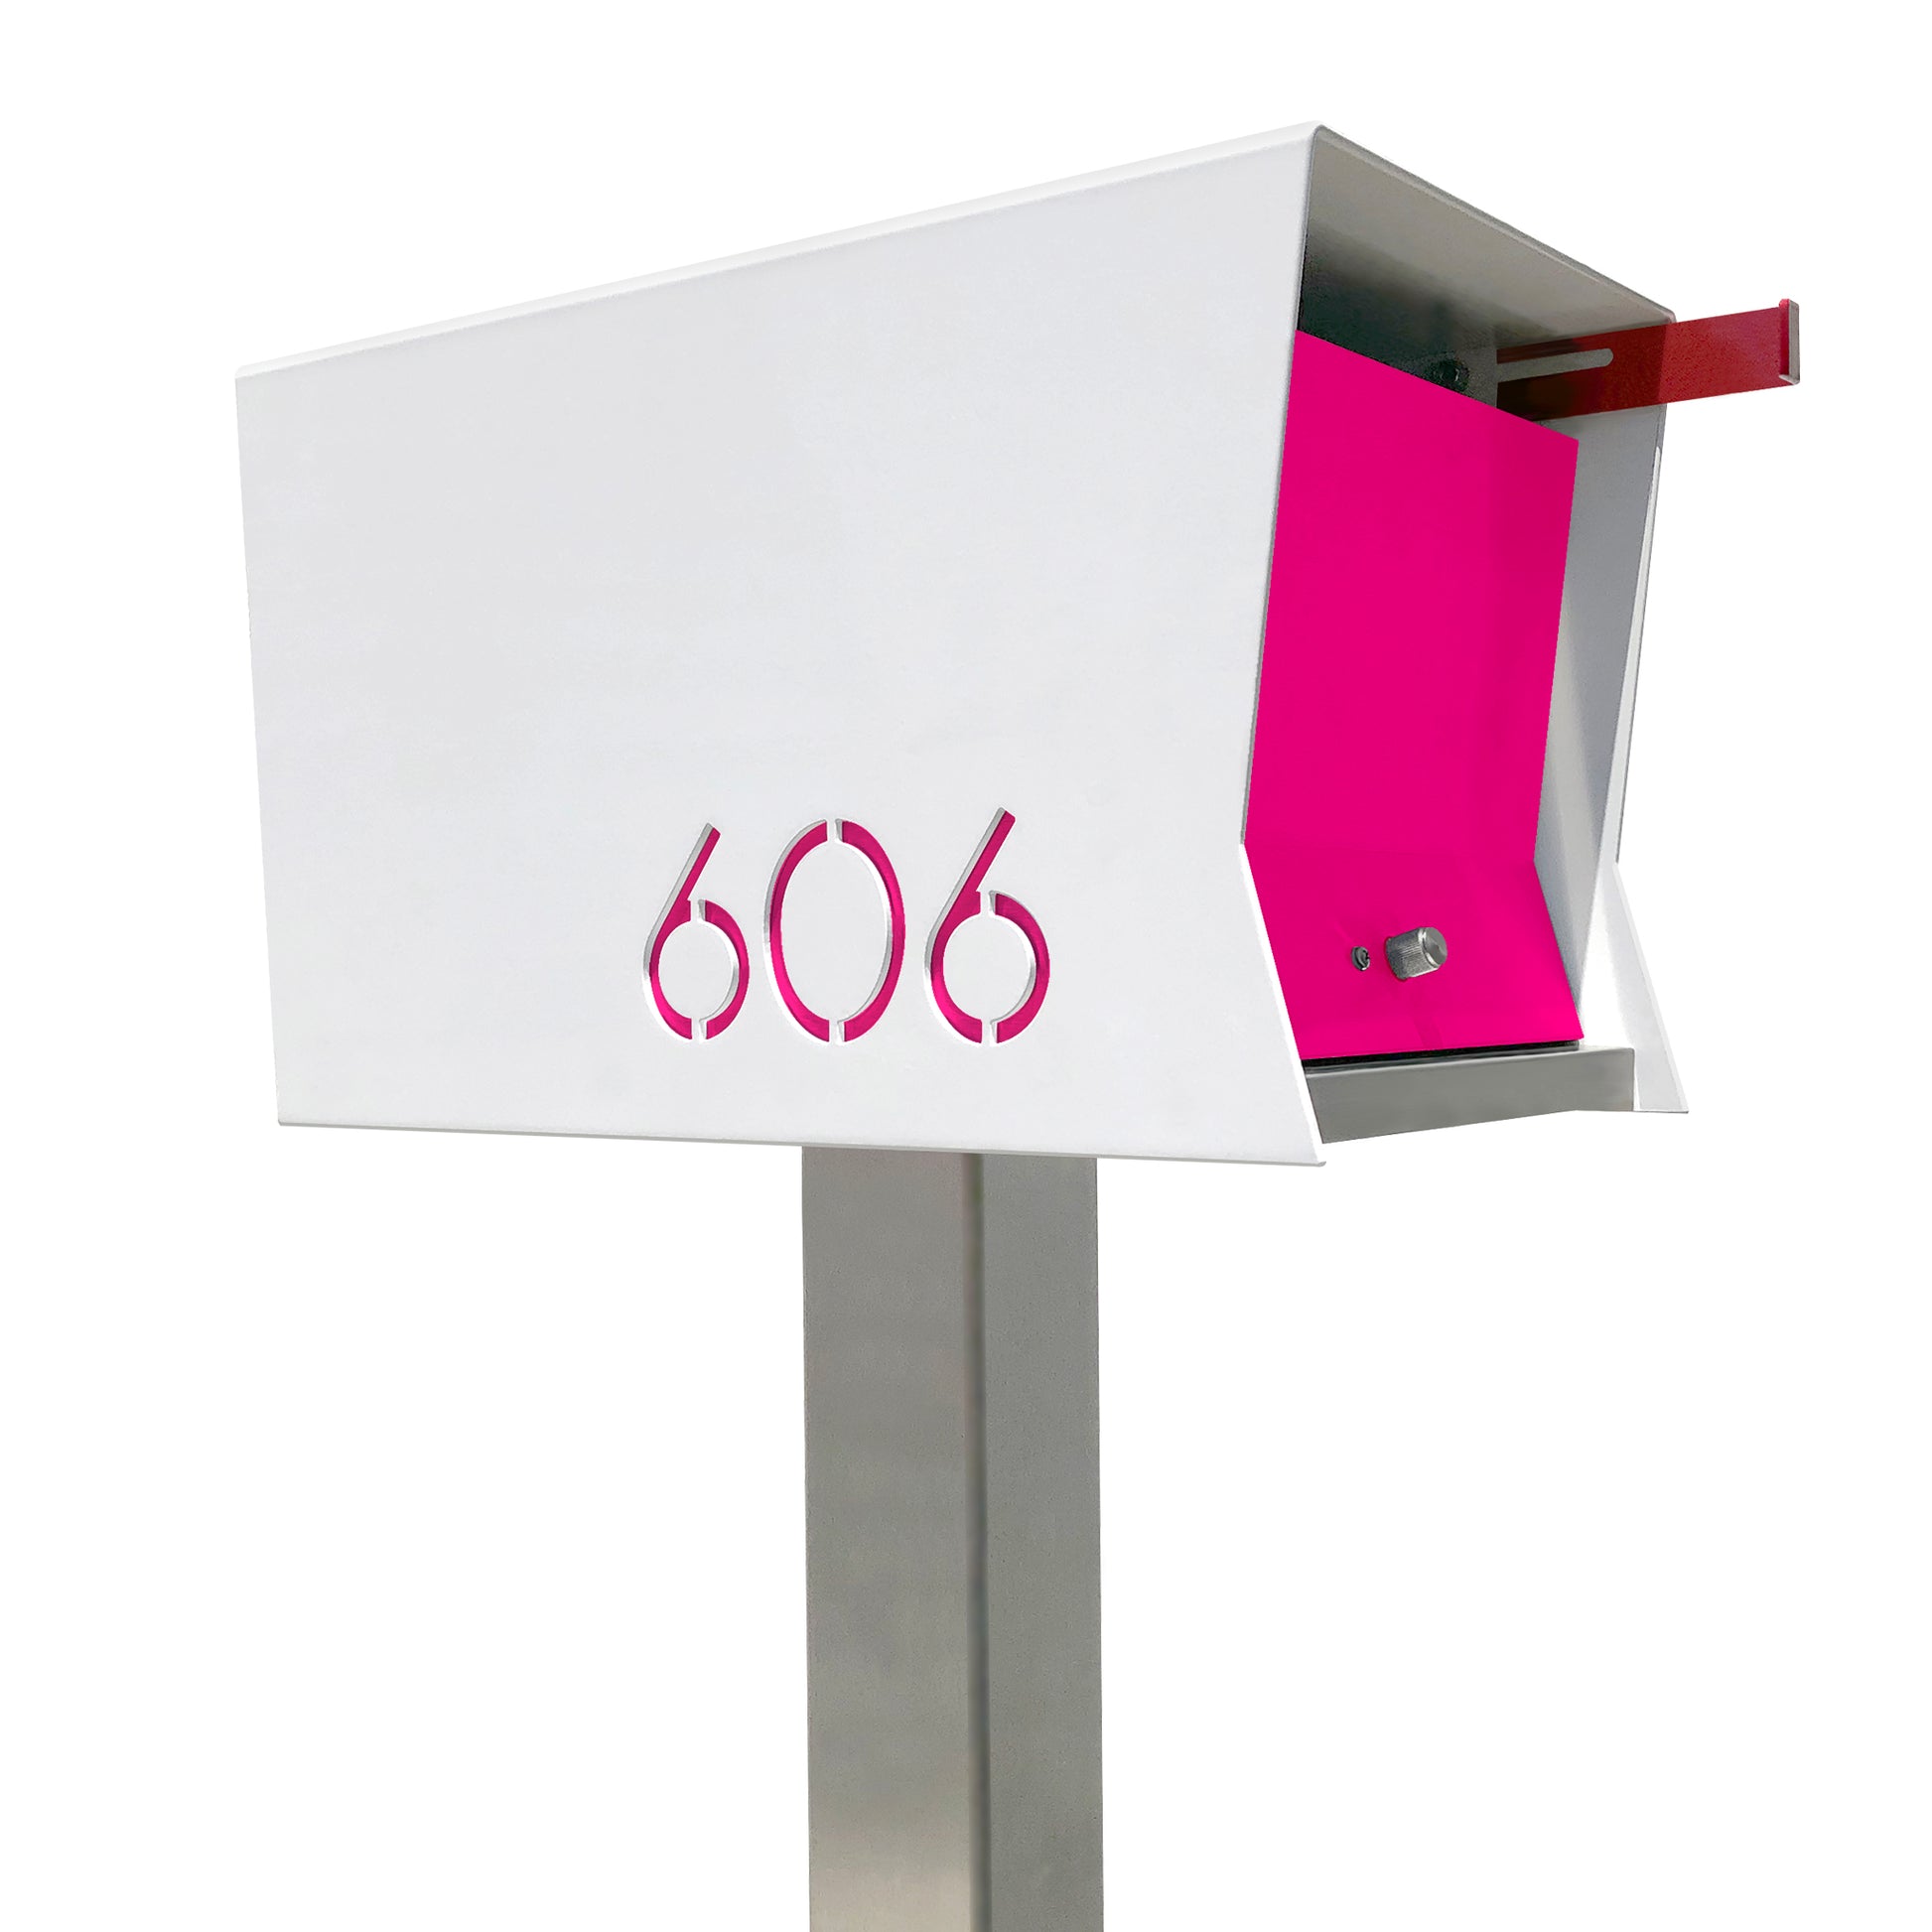 The Original Retrobox in ARCTIC WHITE - Modern Mailbox pink and white